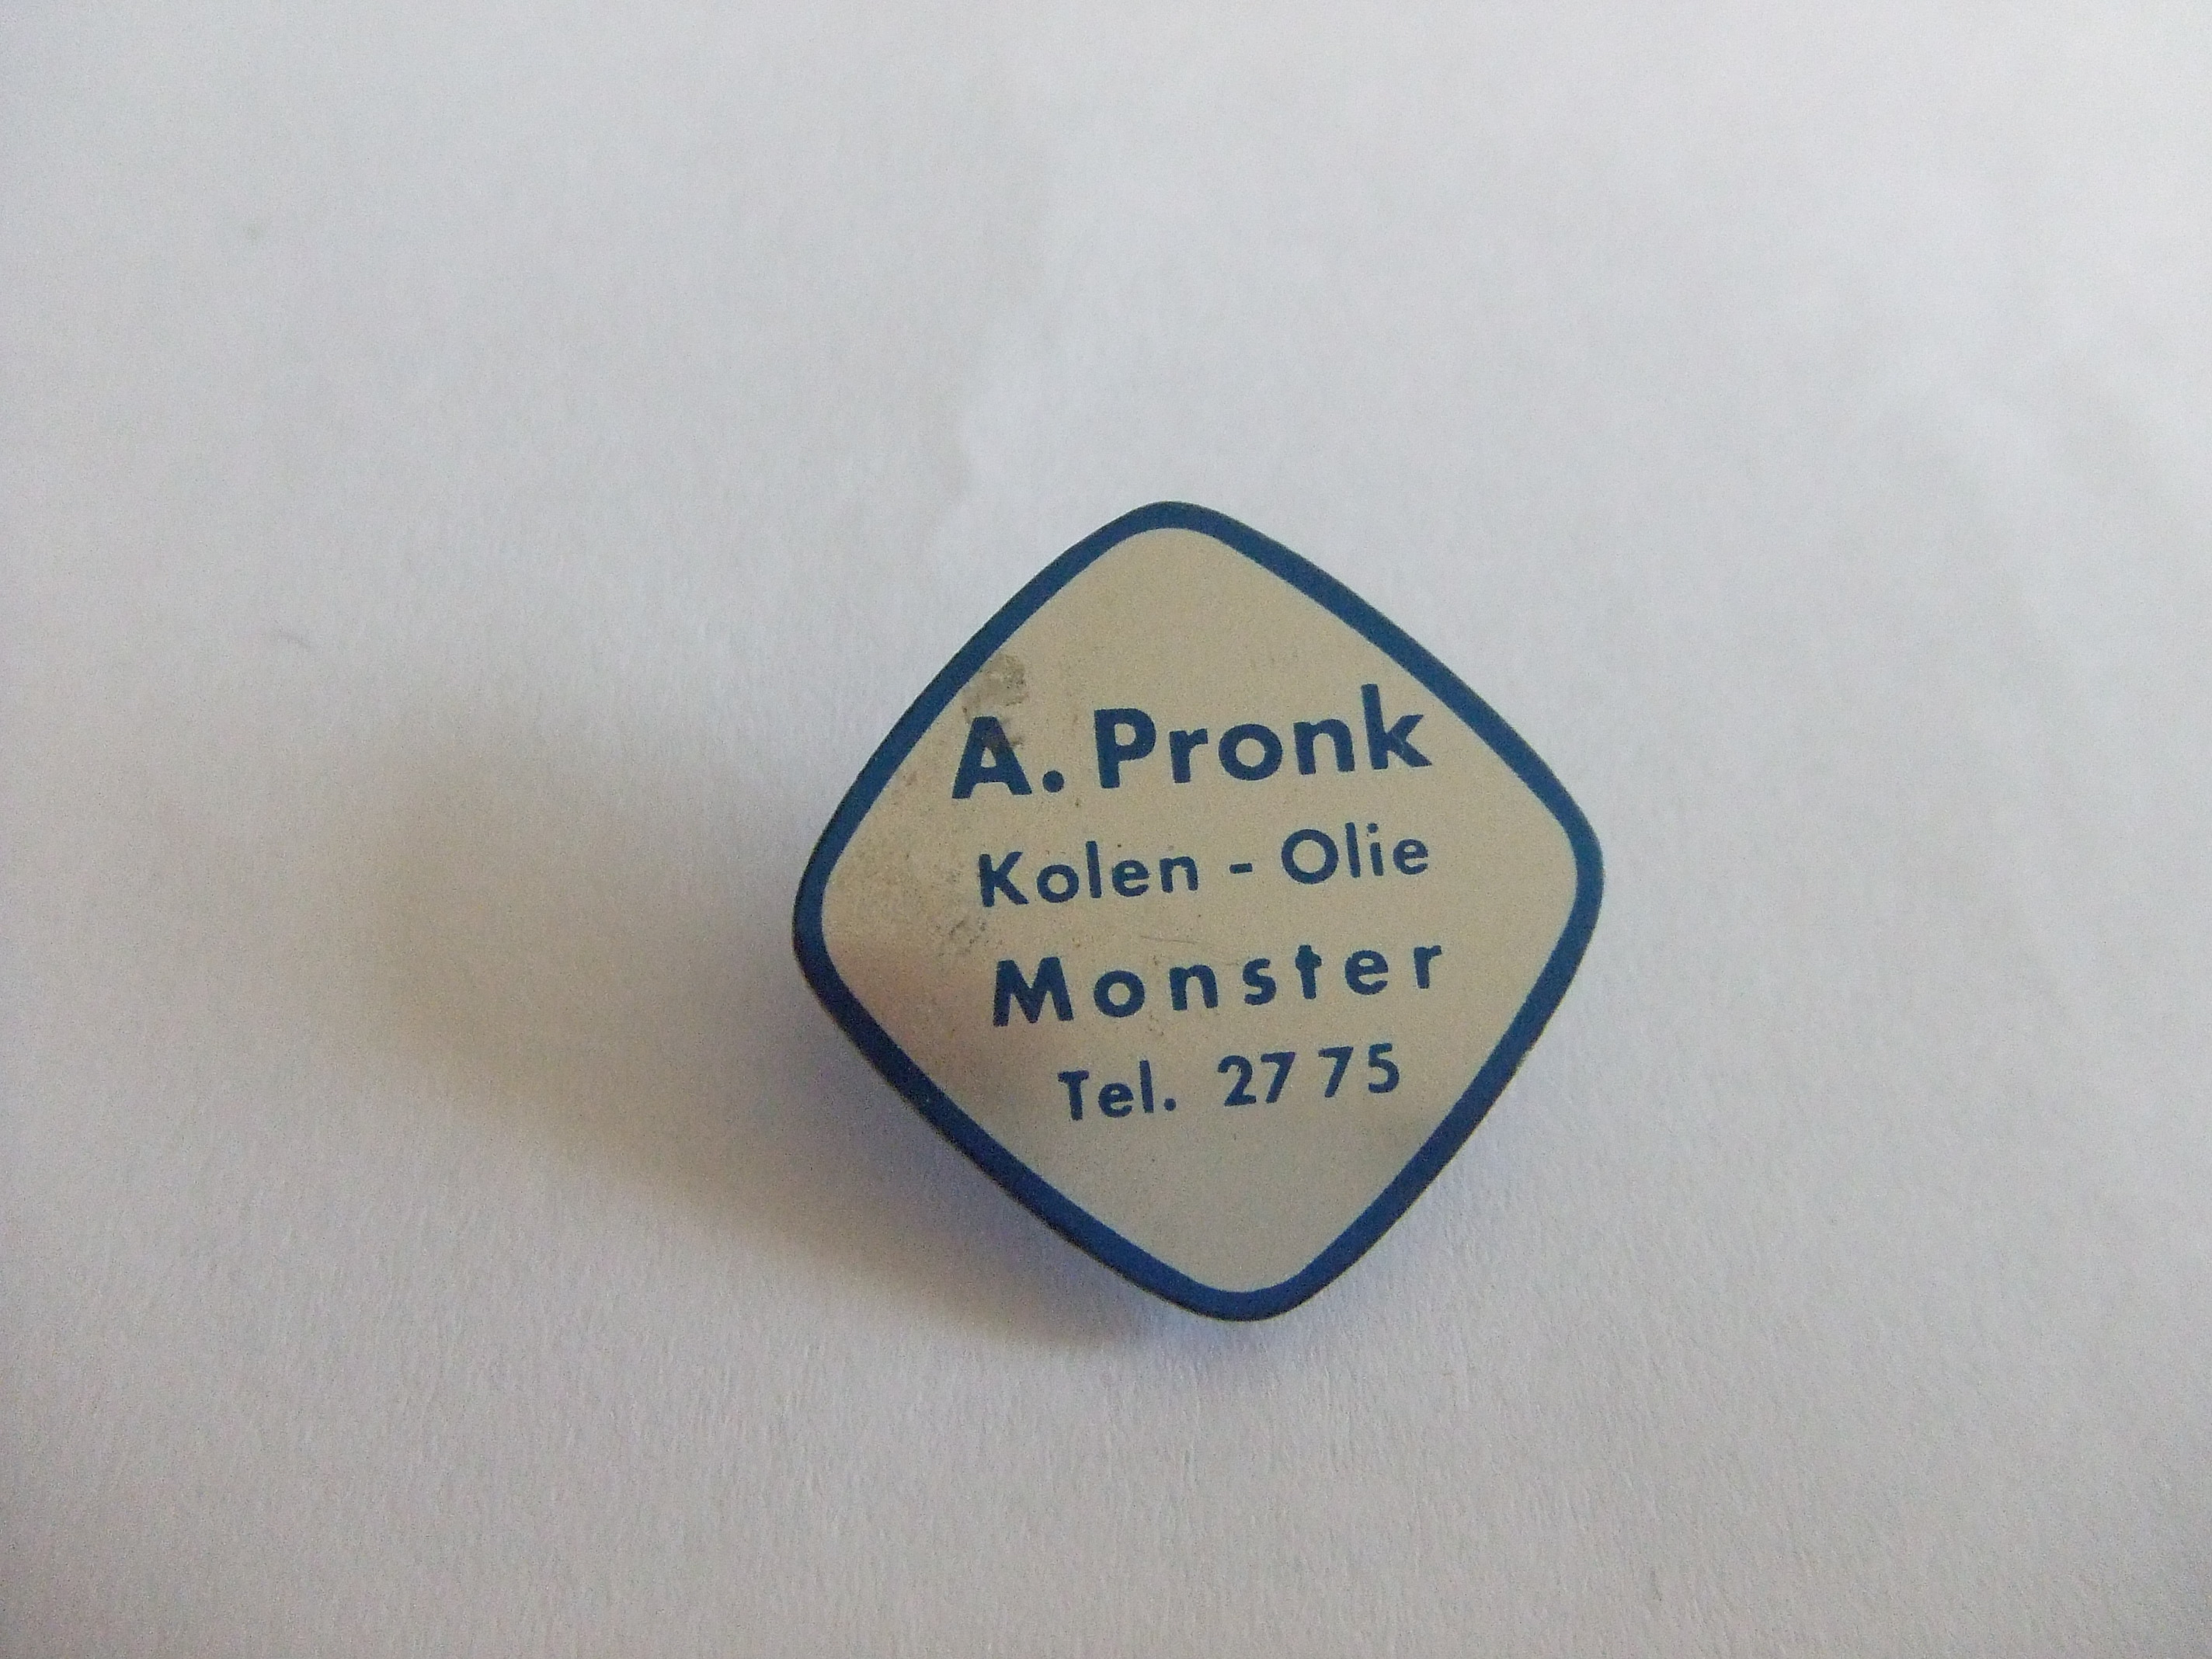 monster A. Pronk kolen-olie